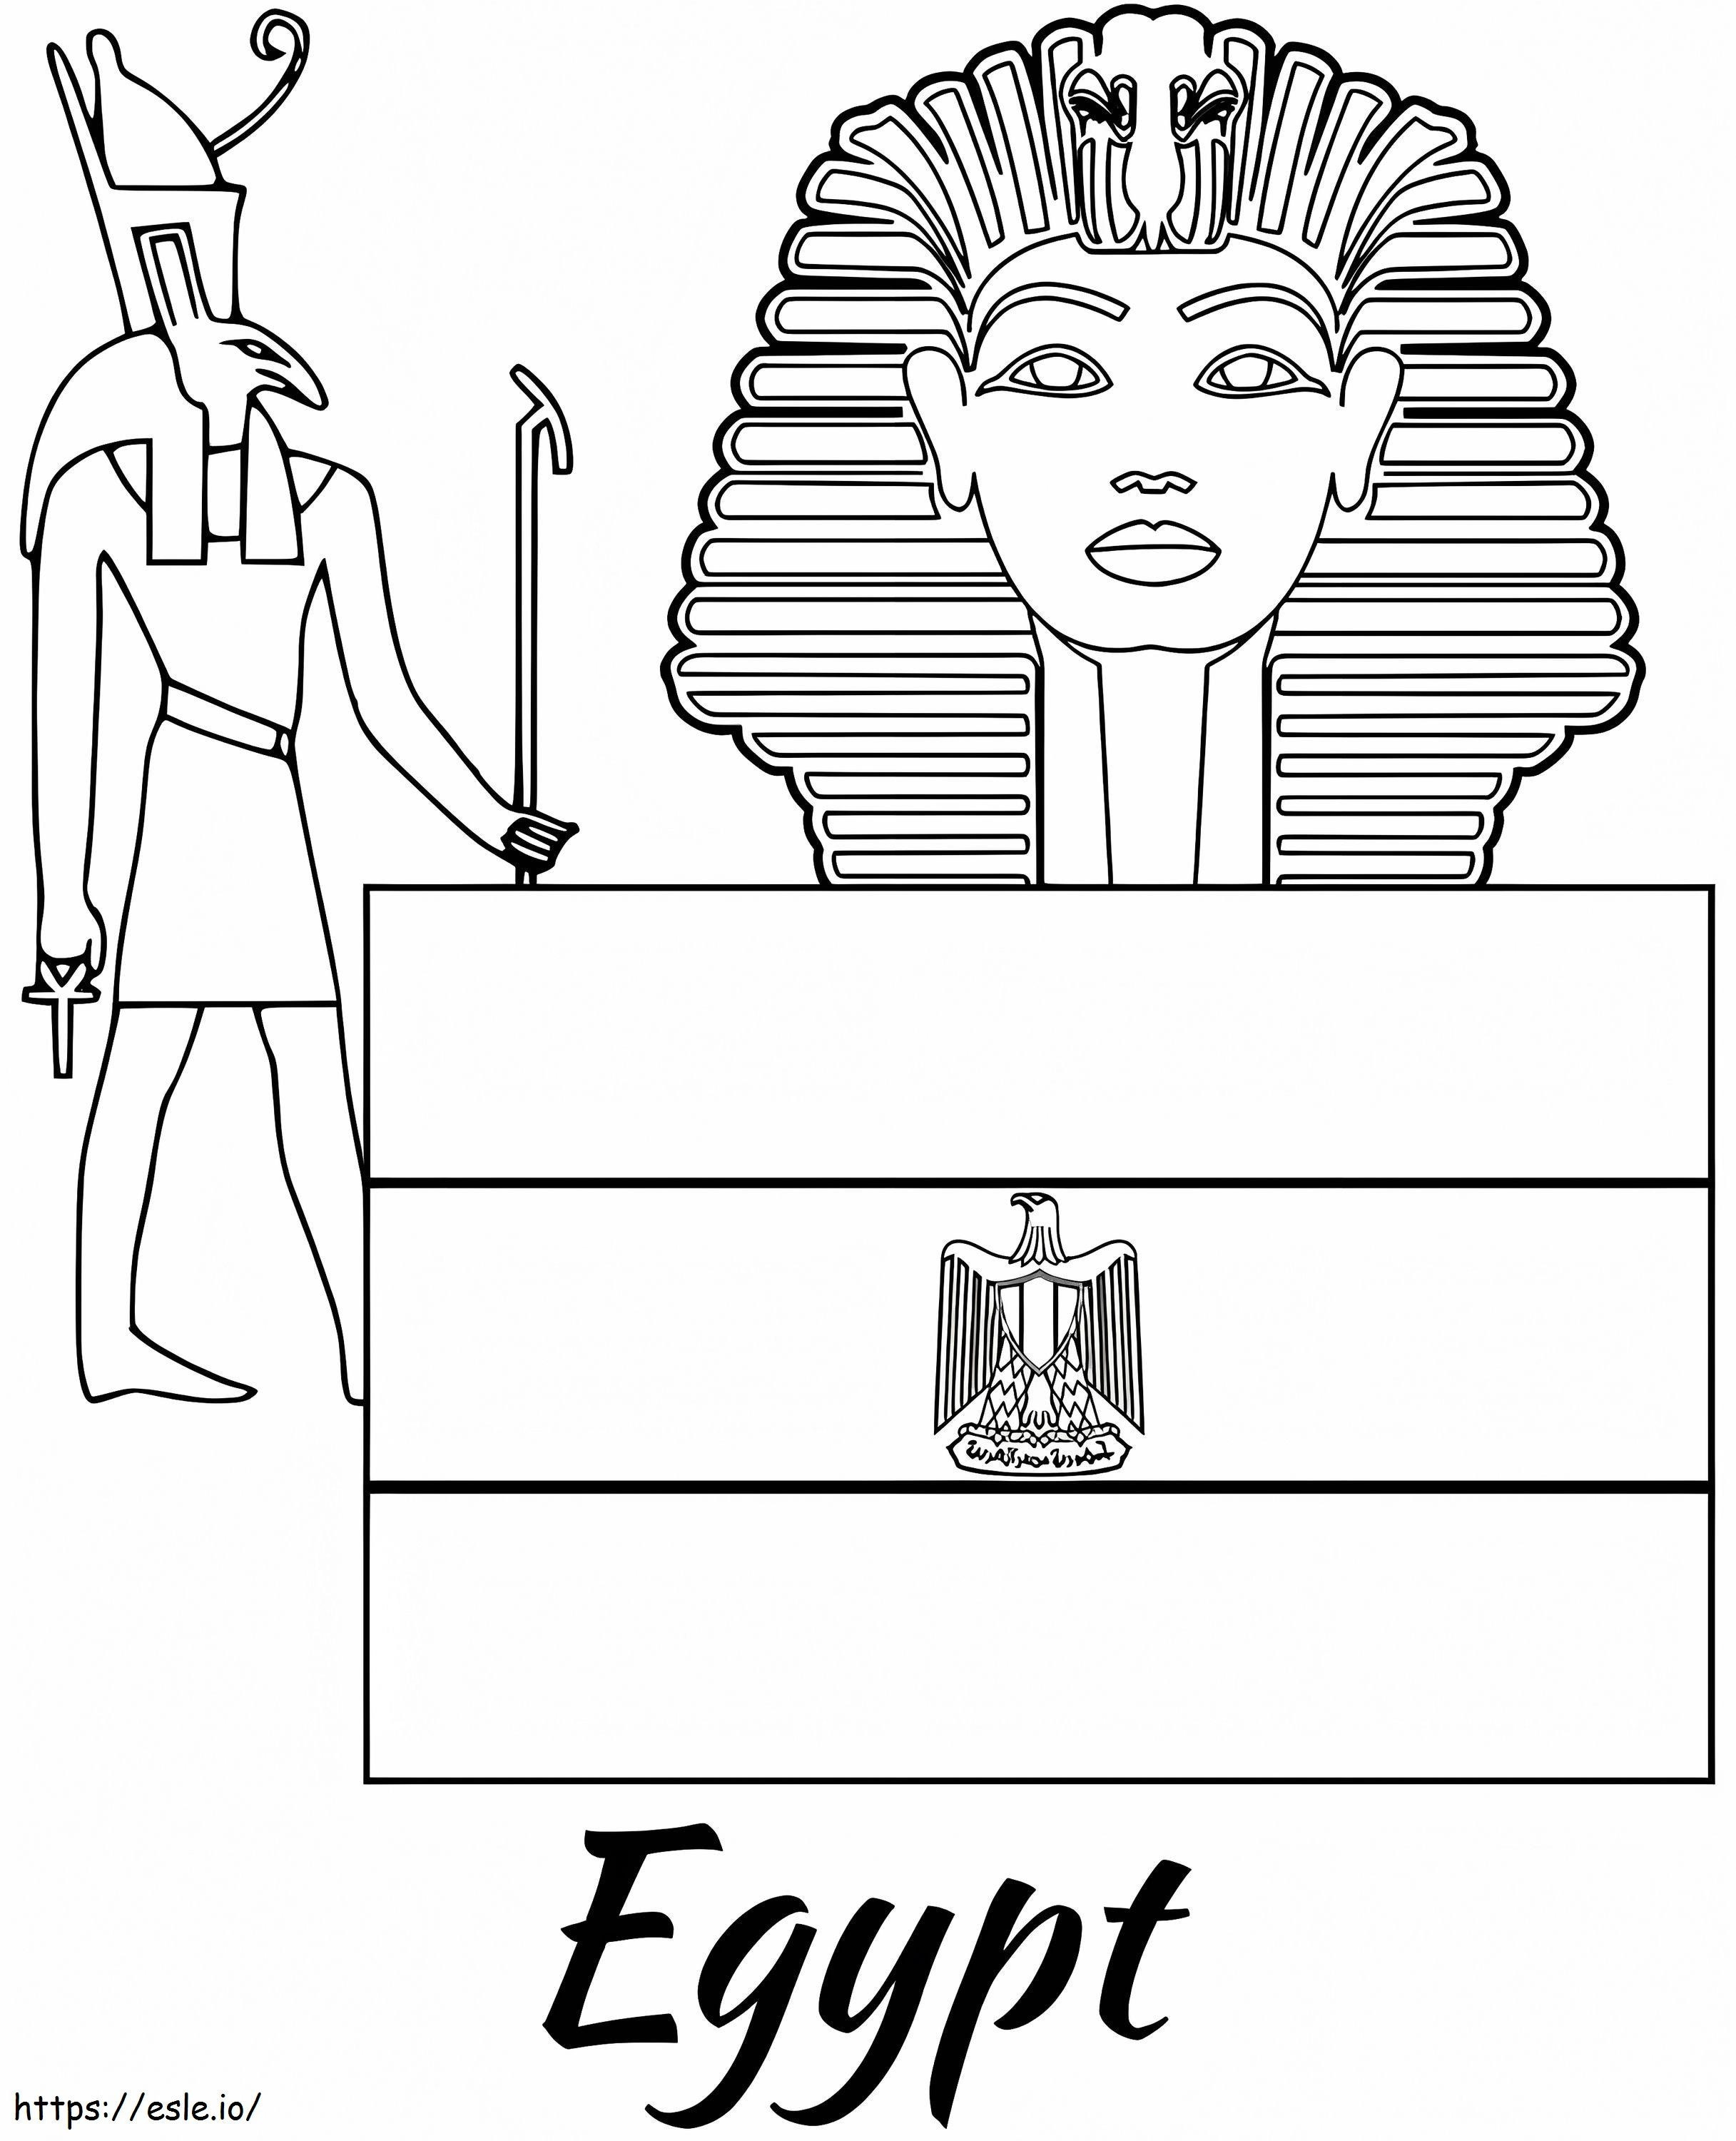 Símbolos de Egipto para colorear